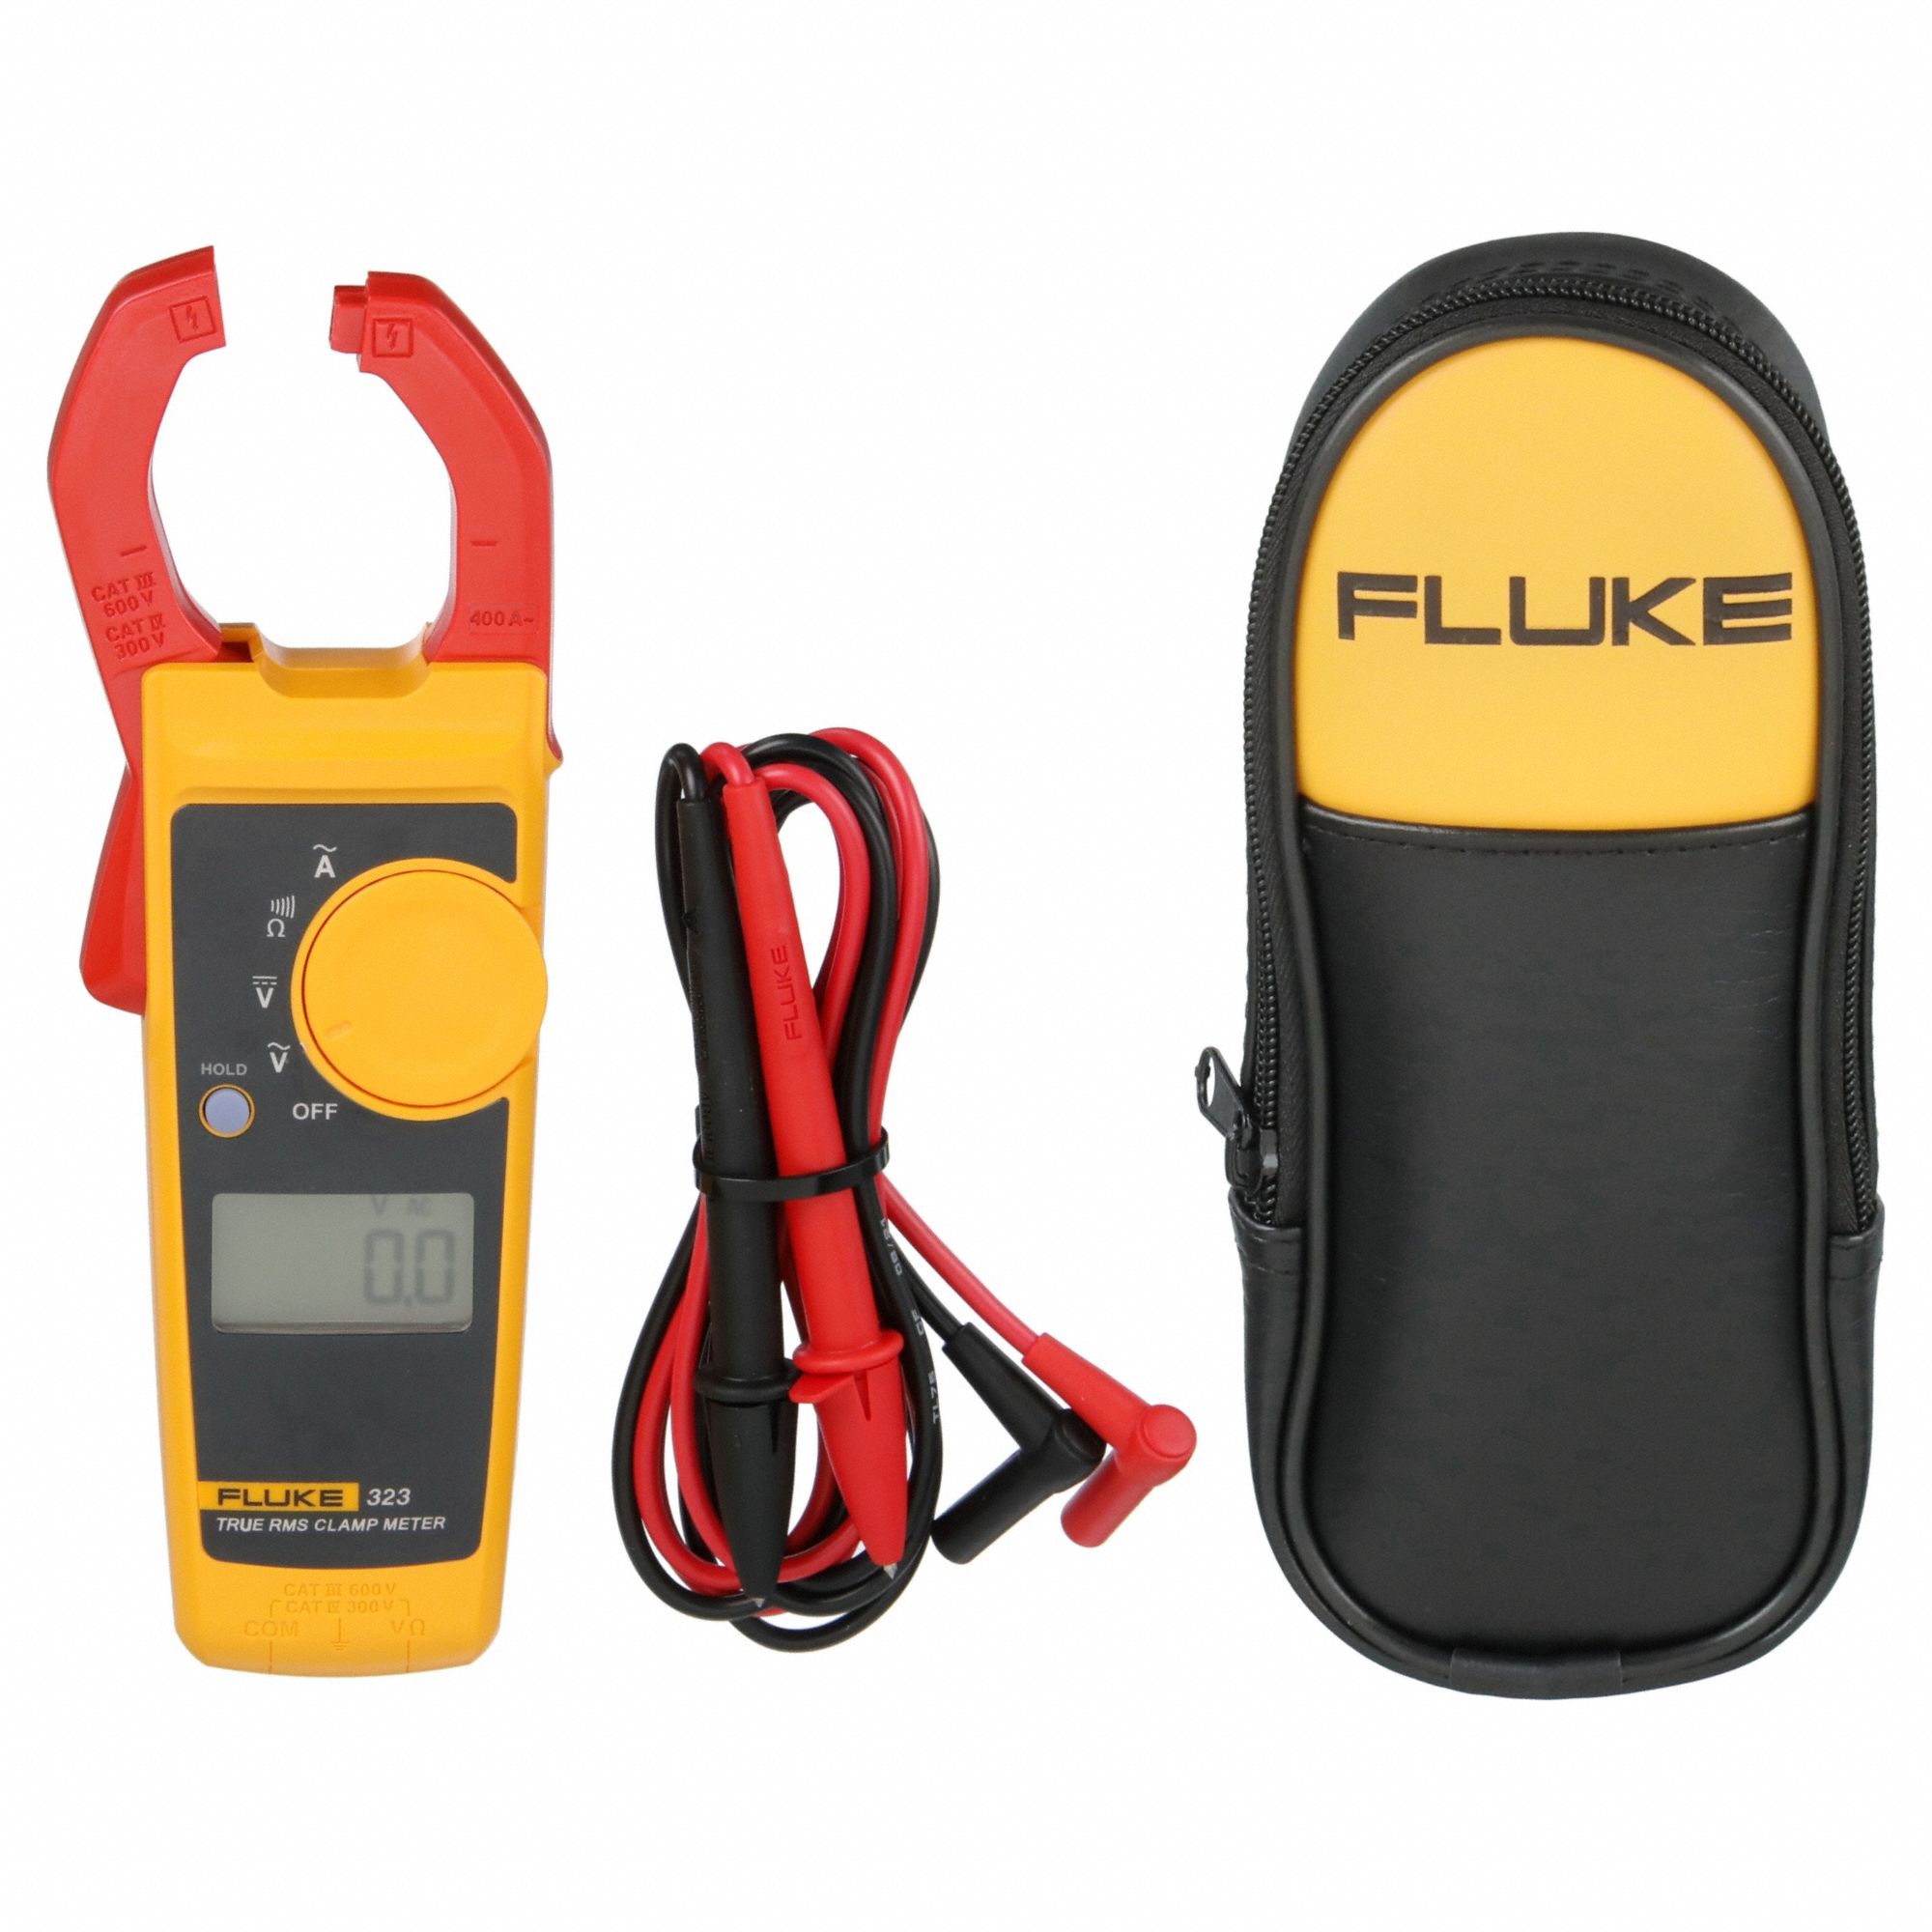 Fluke 323 TRMS- Pince multimètre numérique 400A AC 600V AC/DC - Fluke -  Distrimesure